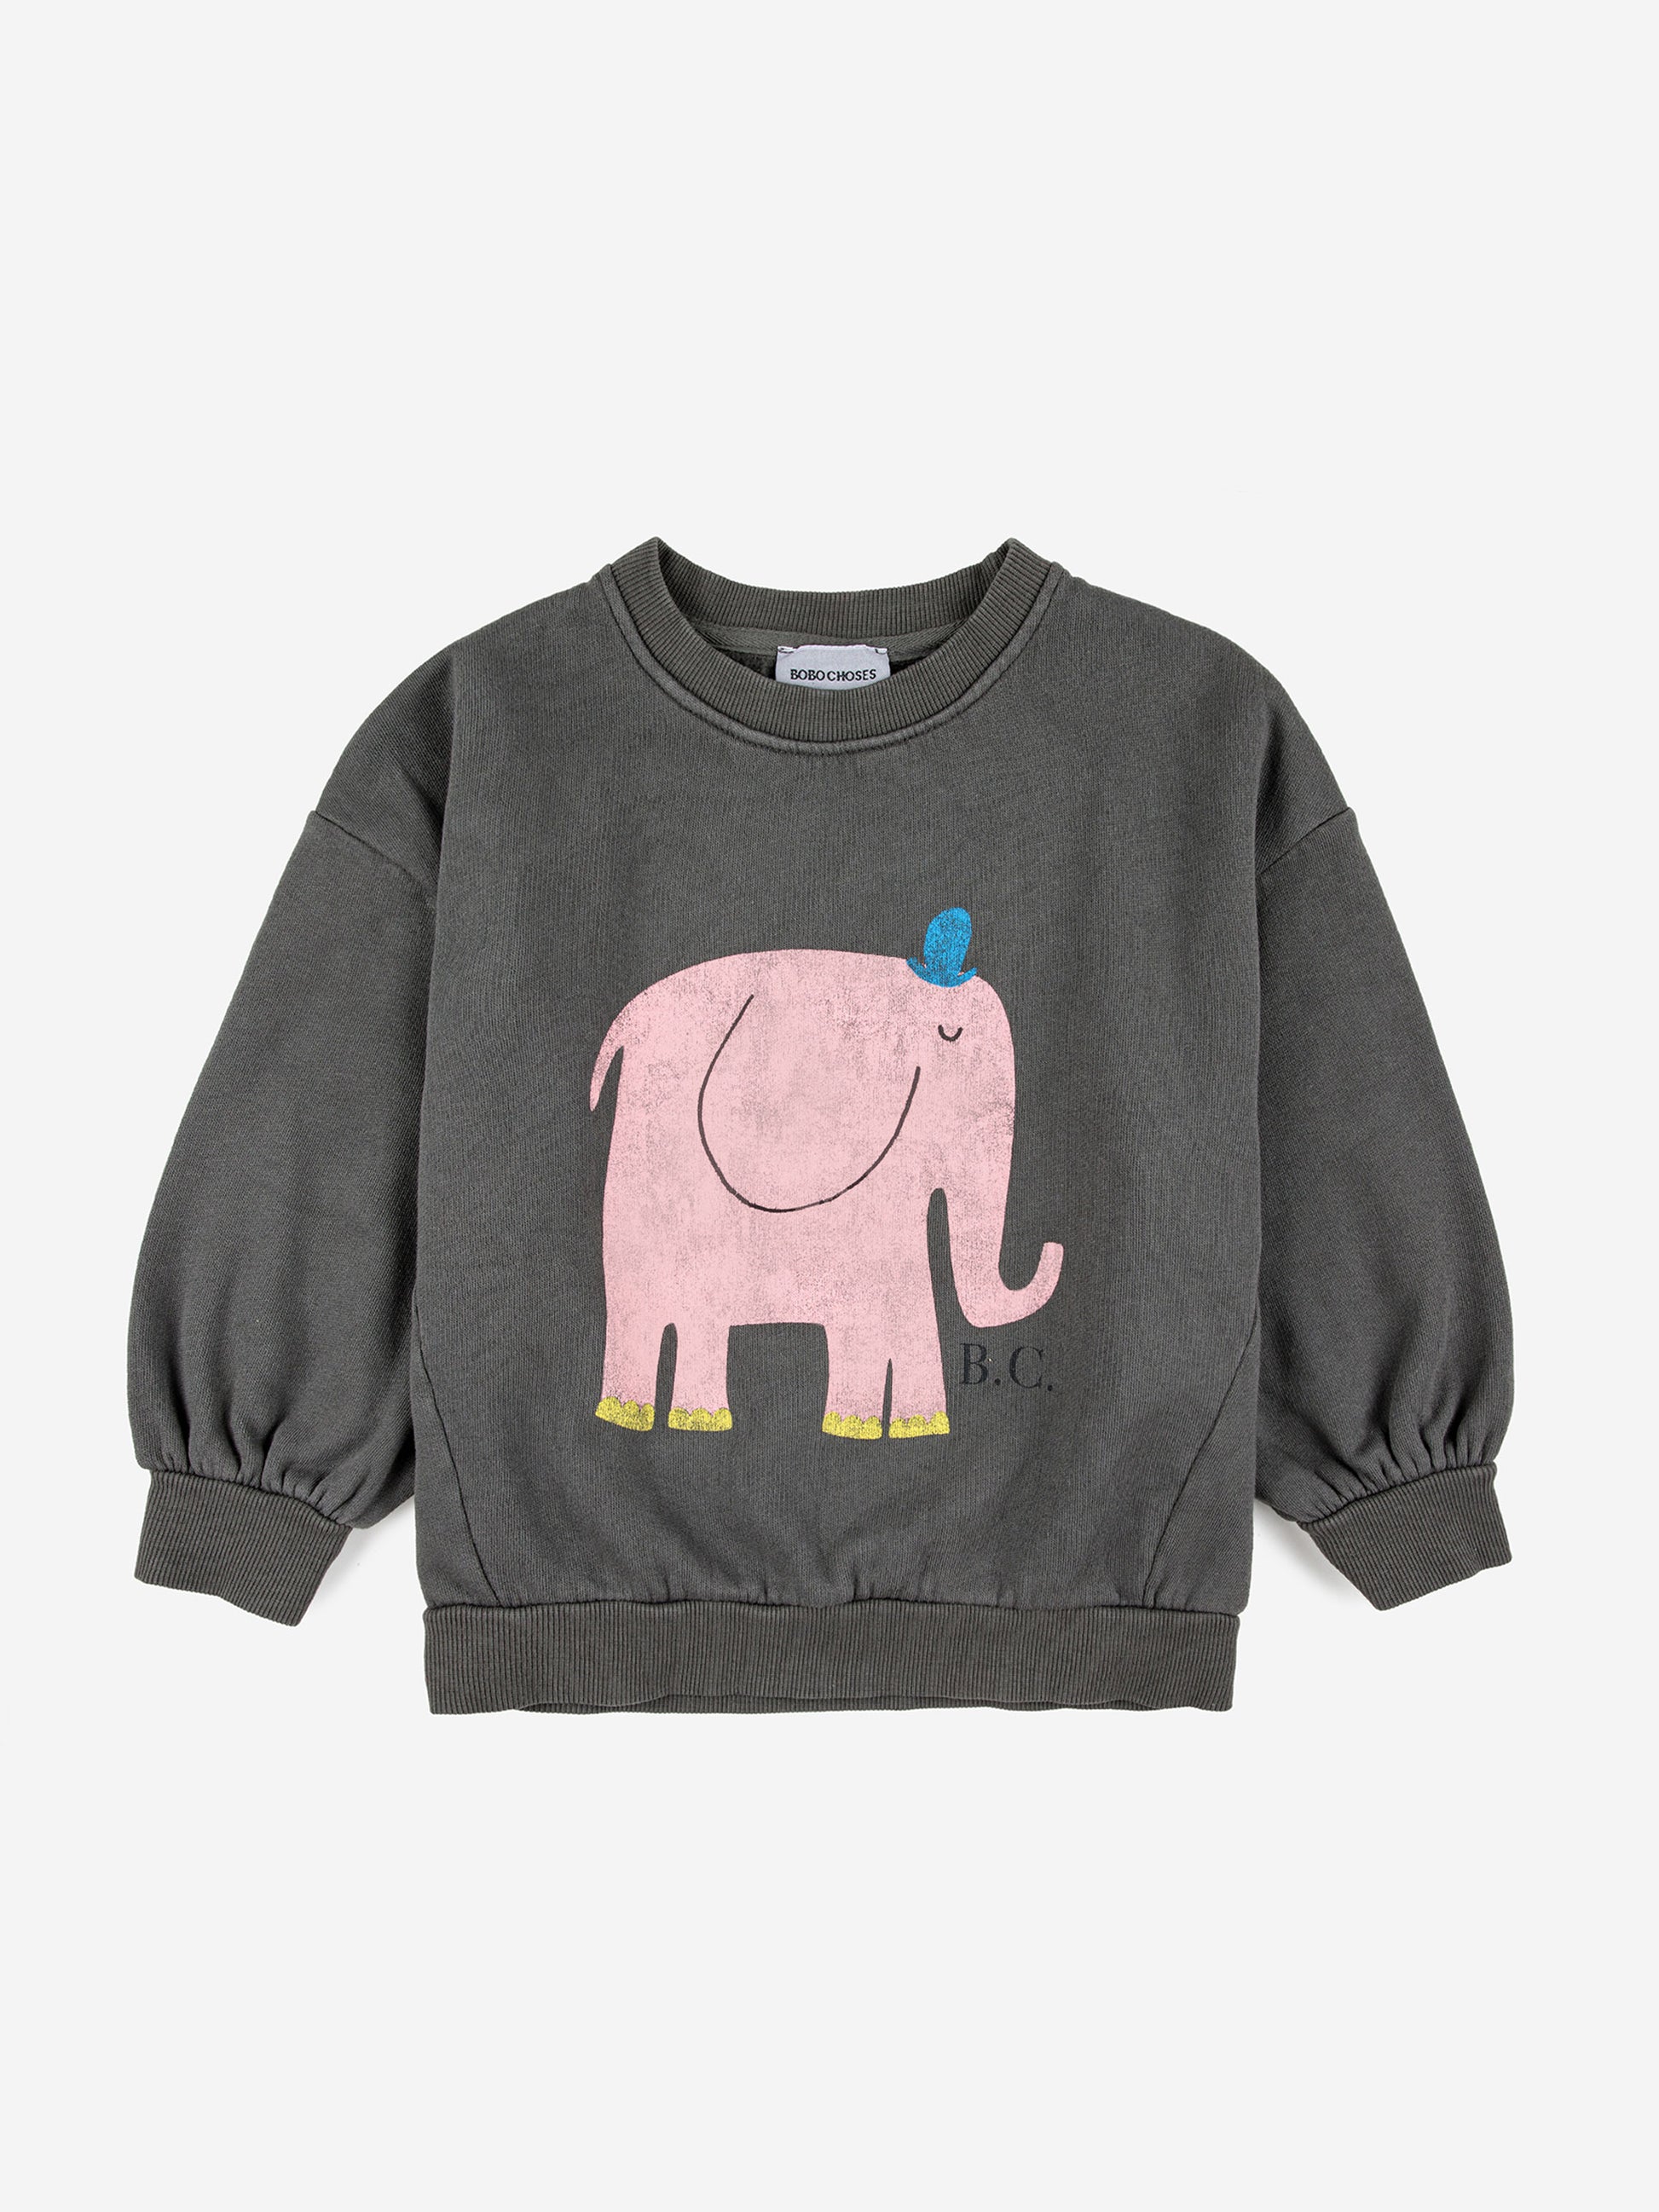 The Elephant sweatshirt Bobo – Choses